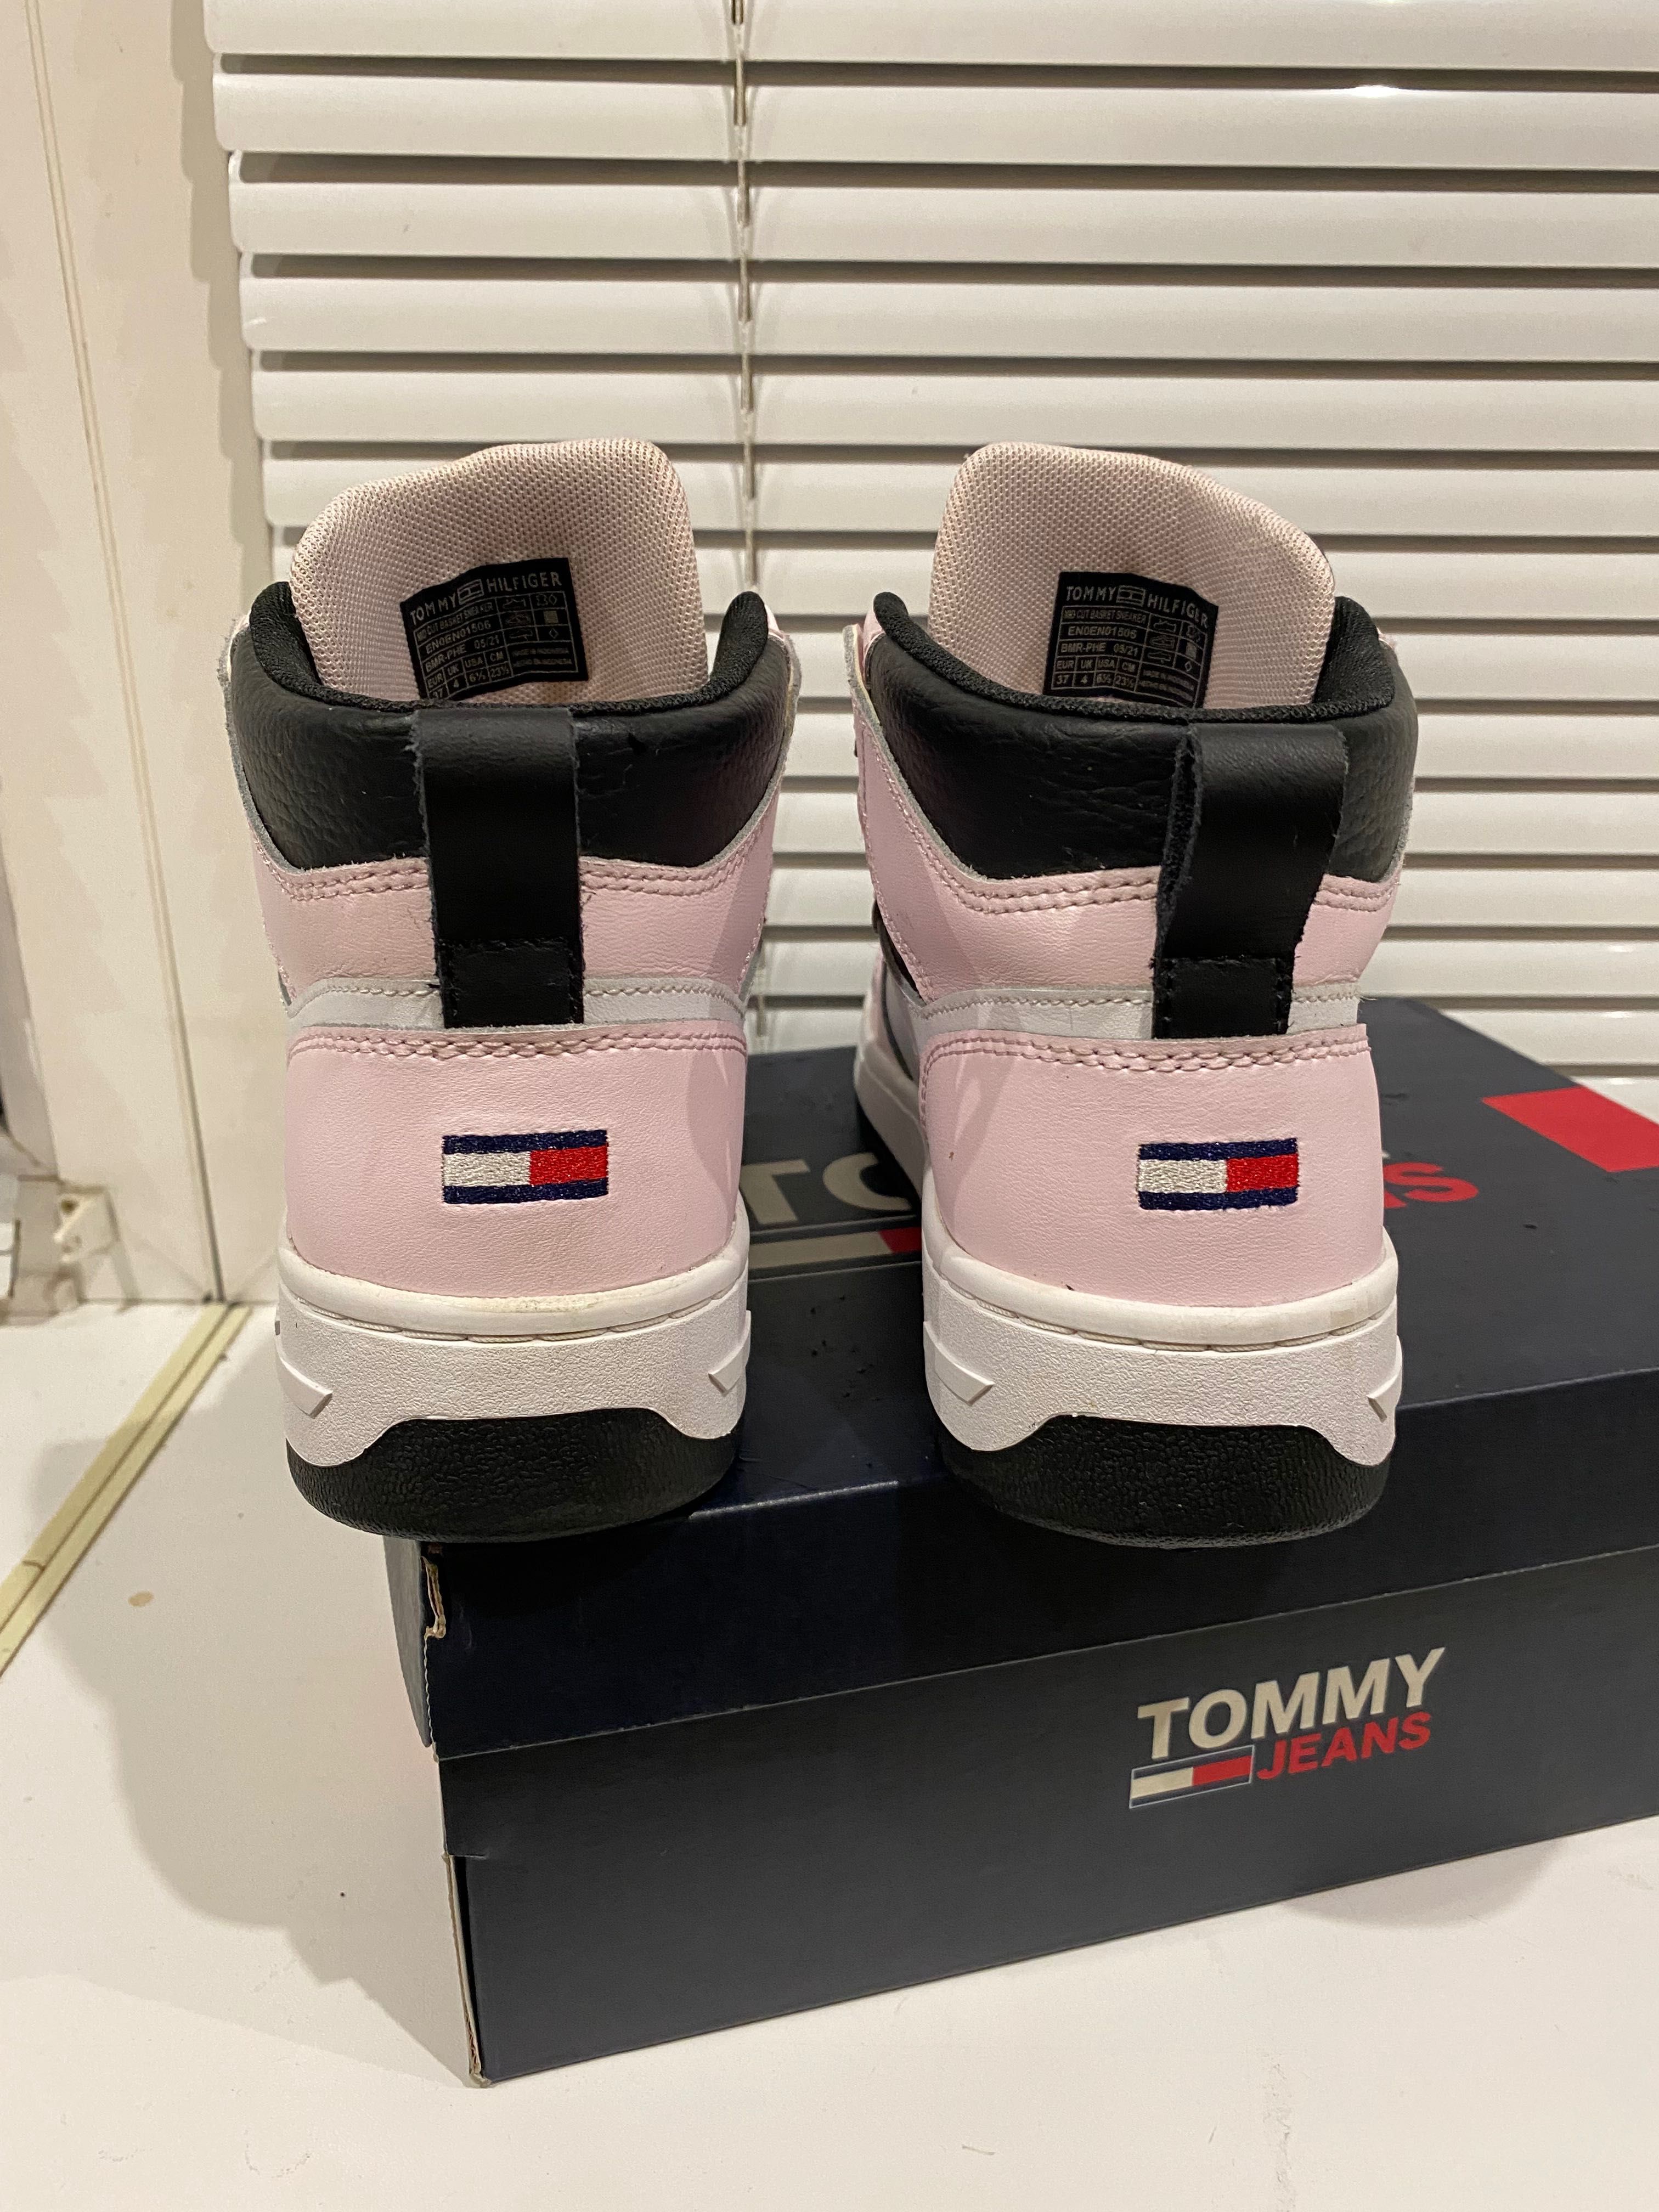 37р Tommy Jeans сникерсы хайтопы кроссовки